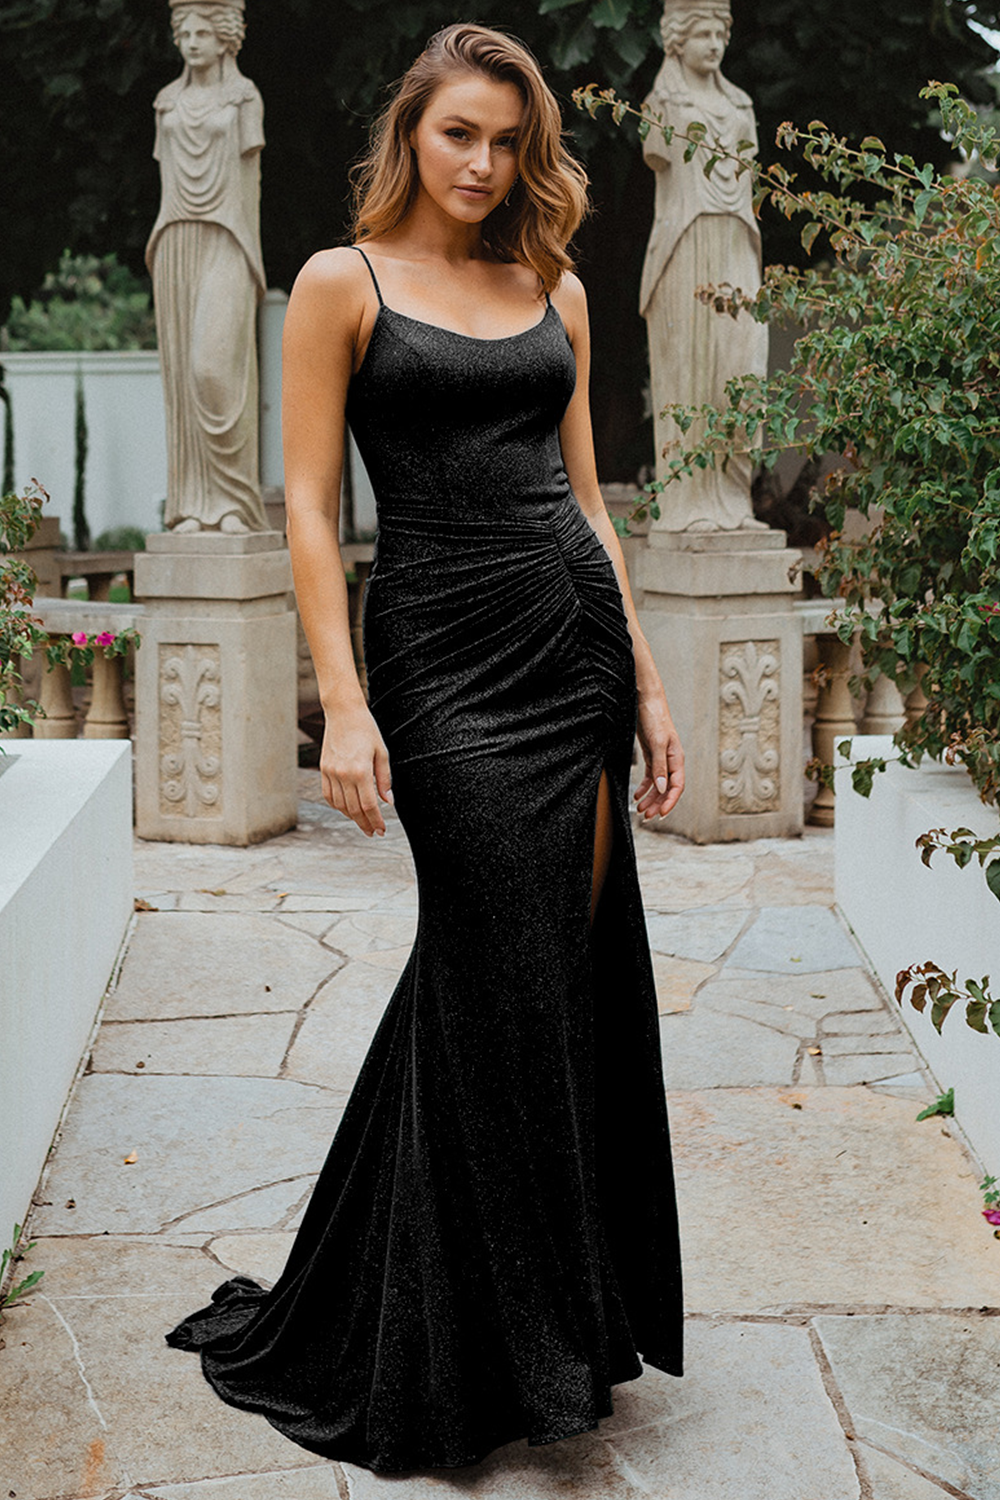 Shanghai Gown PO907 by Tania Olsen Designs - Black/Gold